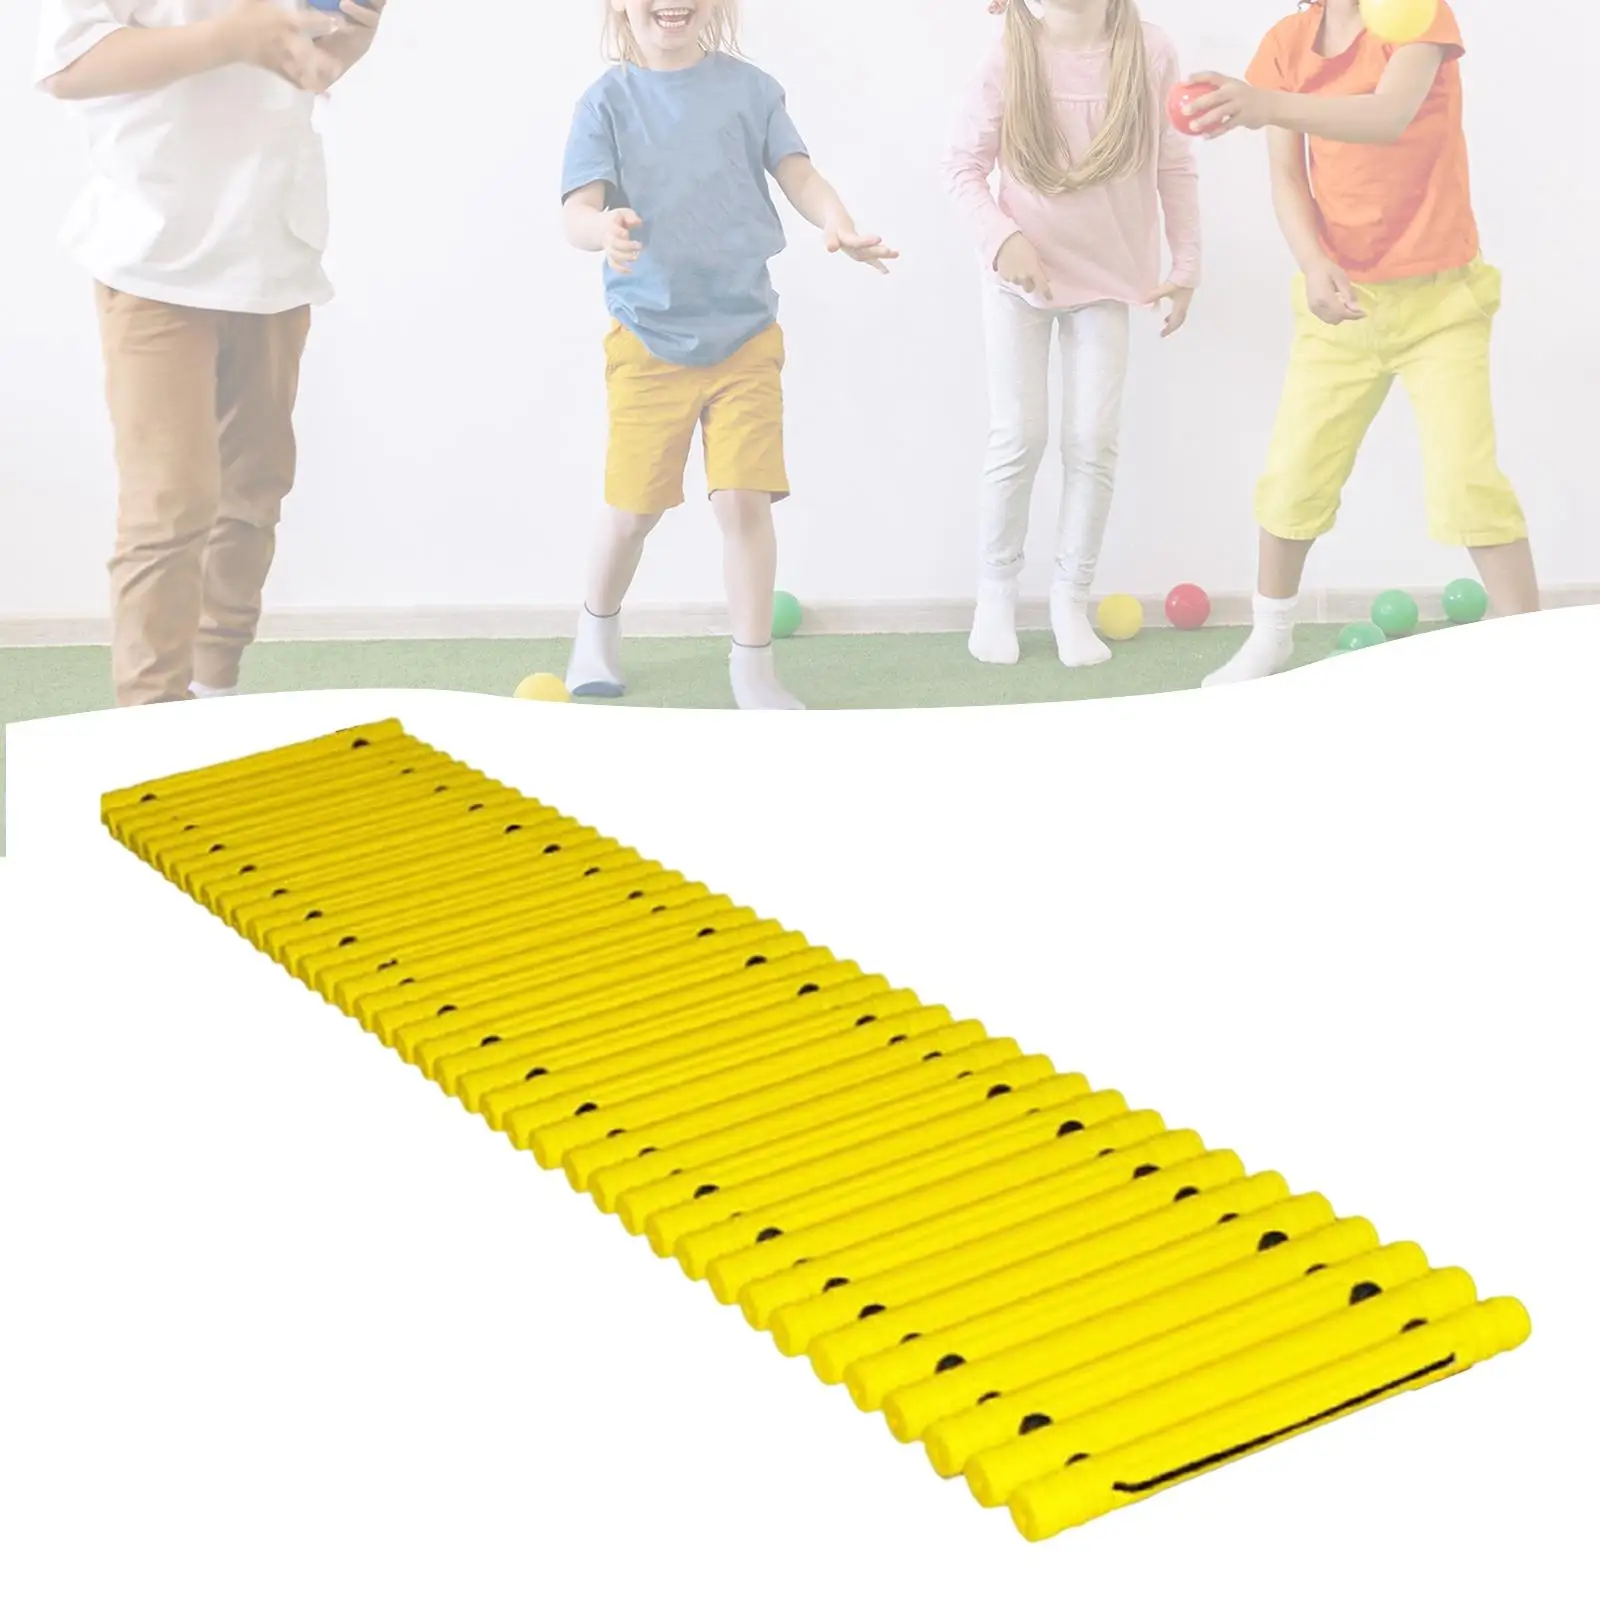 Children Balance Bridge Balance Board Toys,Improve Balance Motor Ability,Core Training Play Equipment for Outdoor Indoor